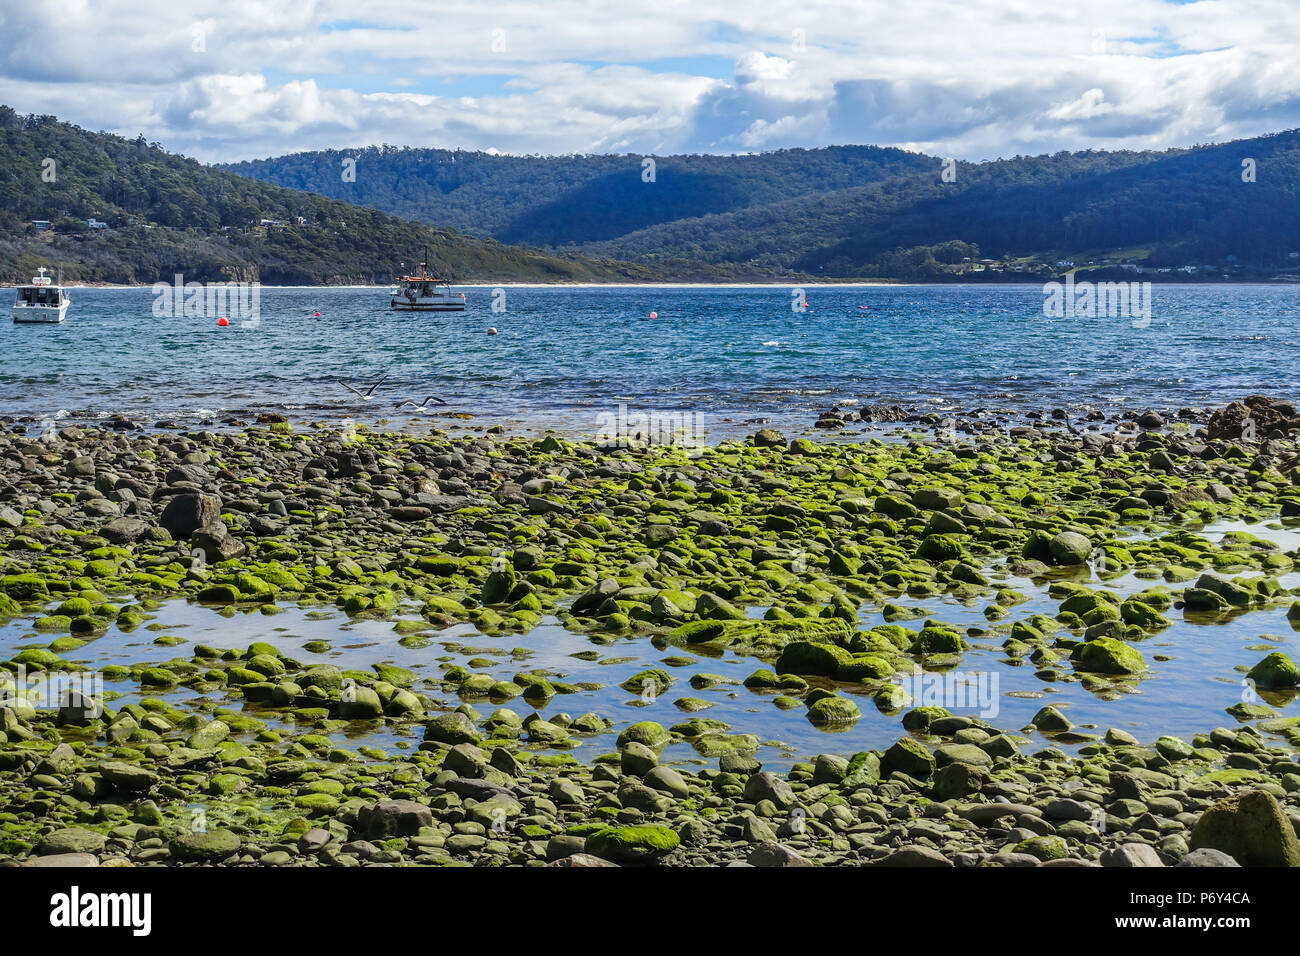 Beautiful view of rocky beach, blue sea and mountains in Pirates Bay near Fossil Island in Tasmania, Australia. Stock Photo